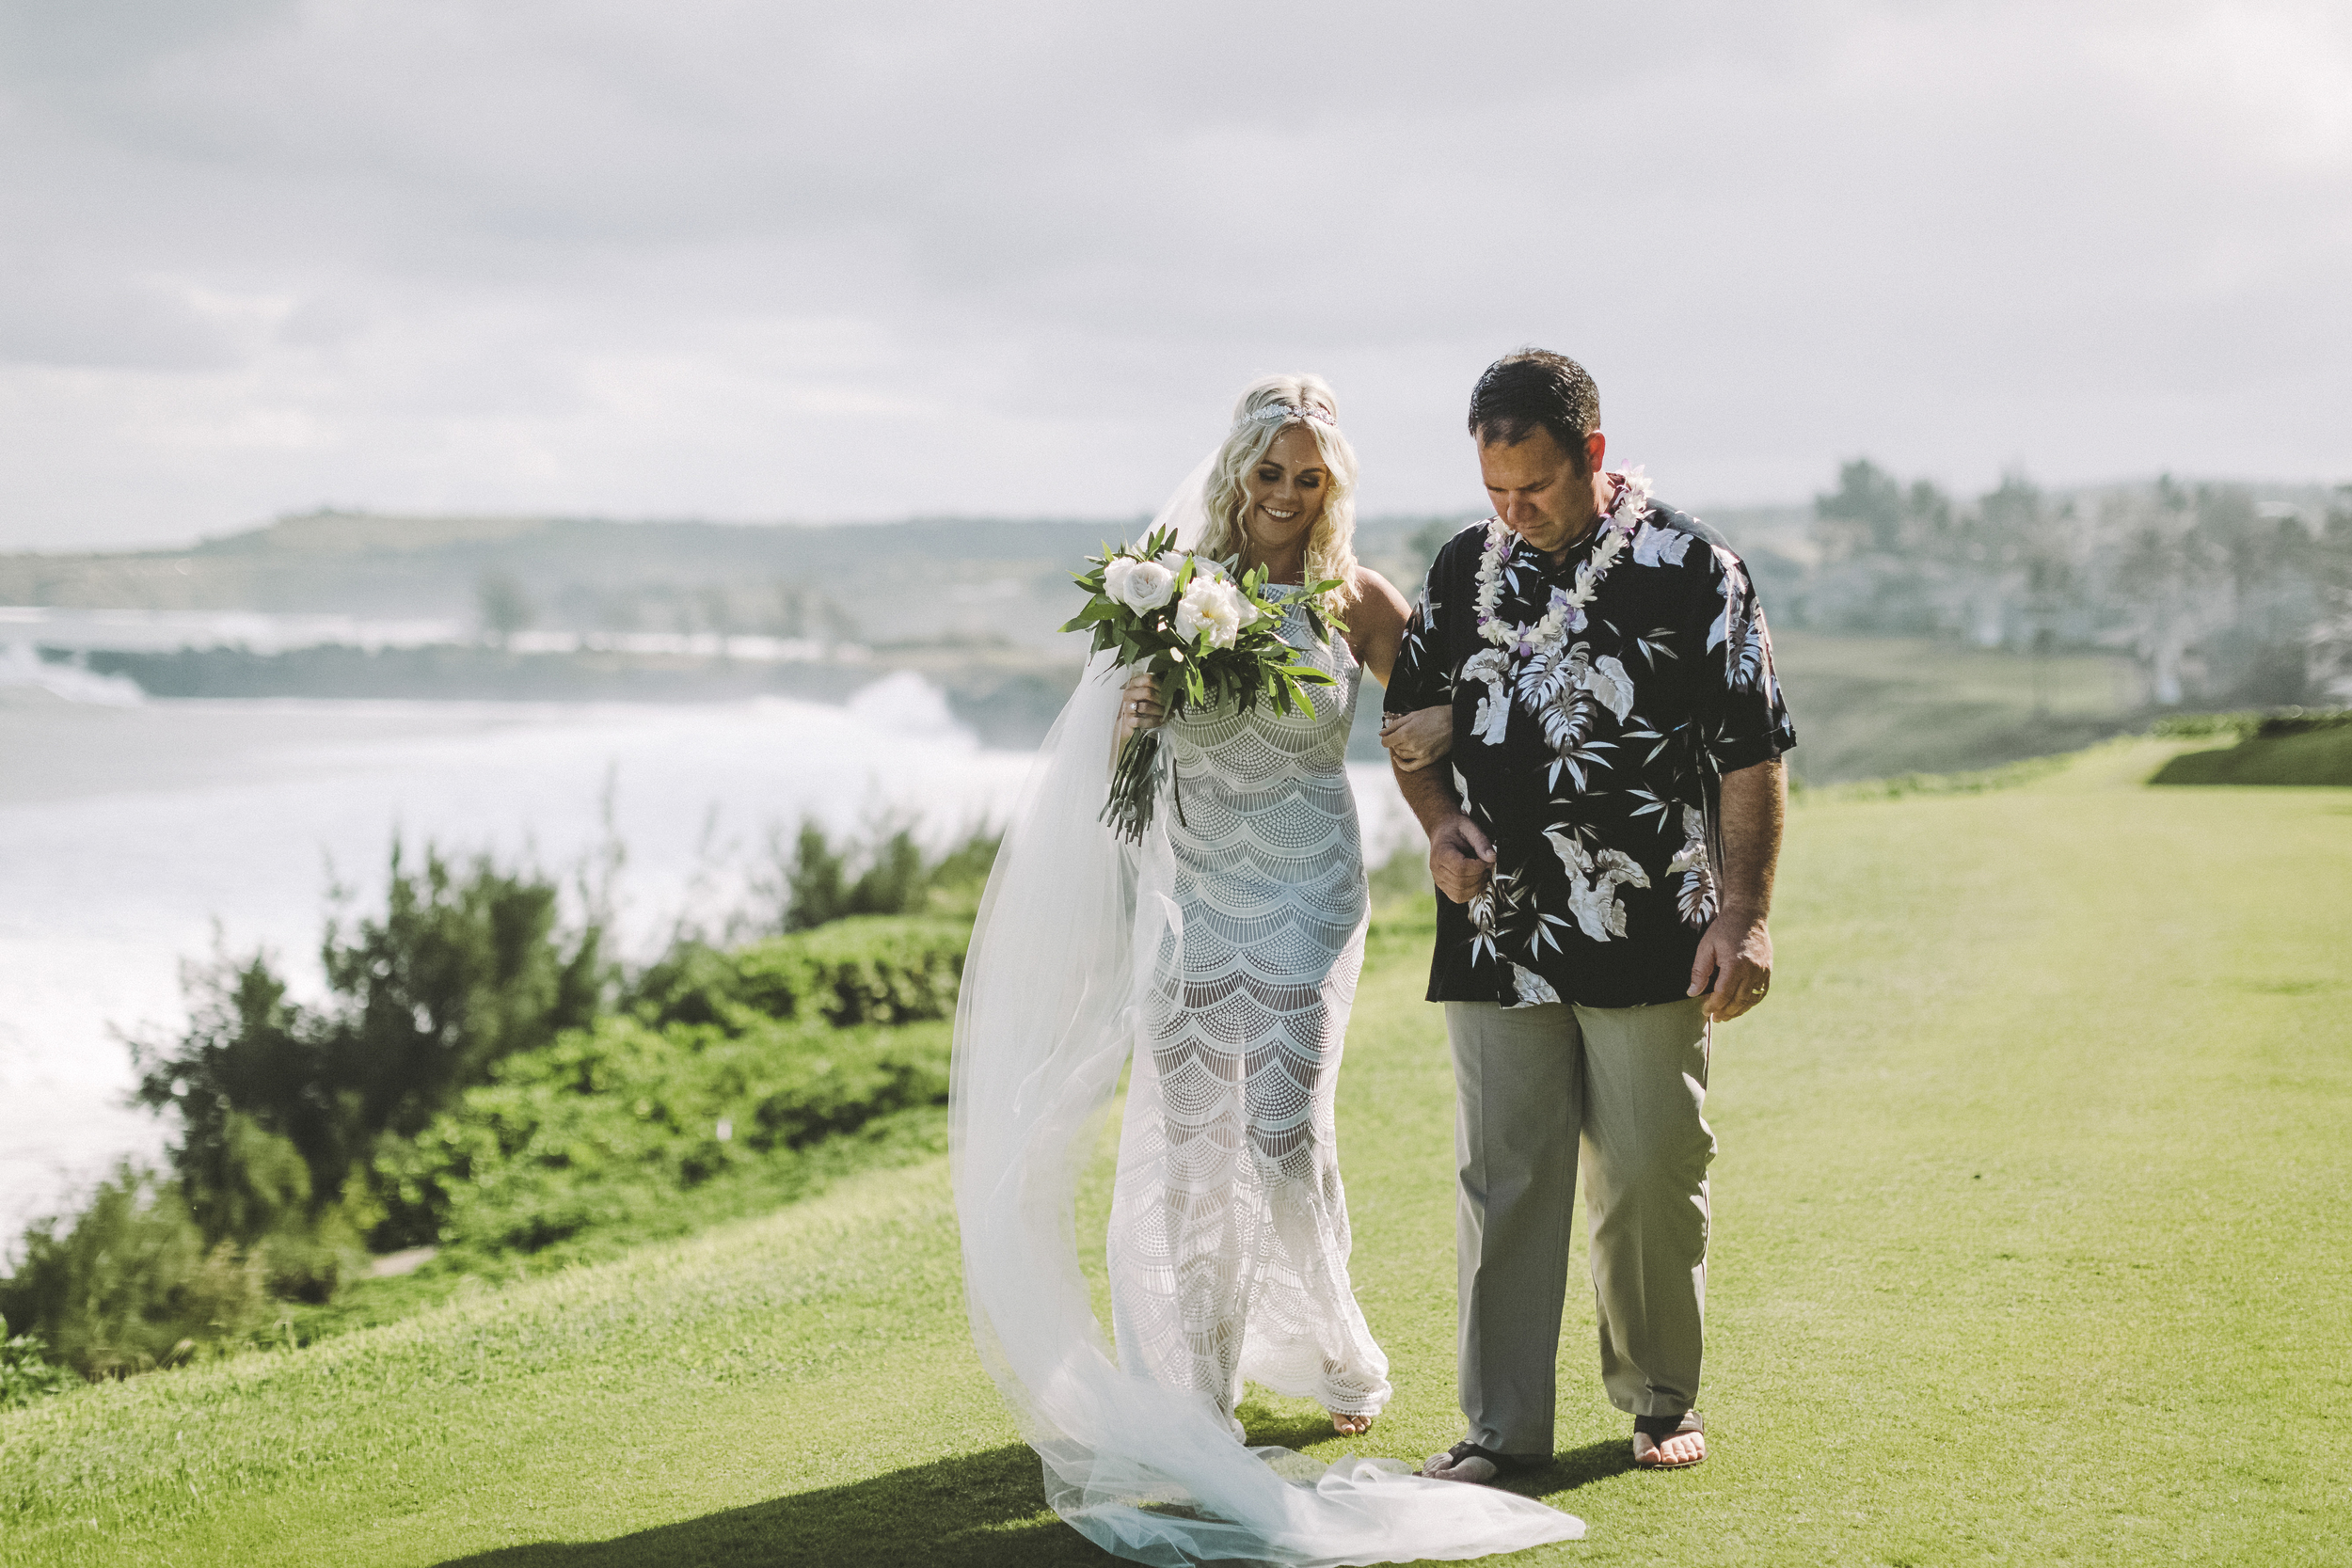 angie-diaz-photography-hawaii-wedding-13-1.jpg